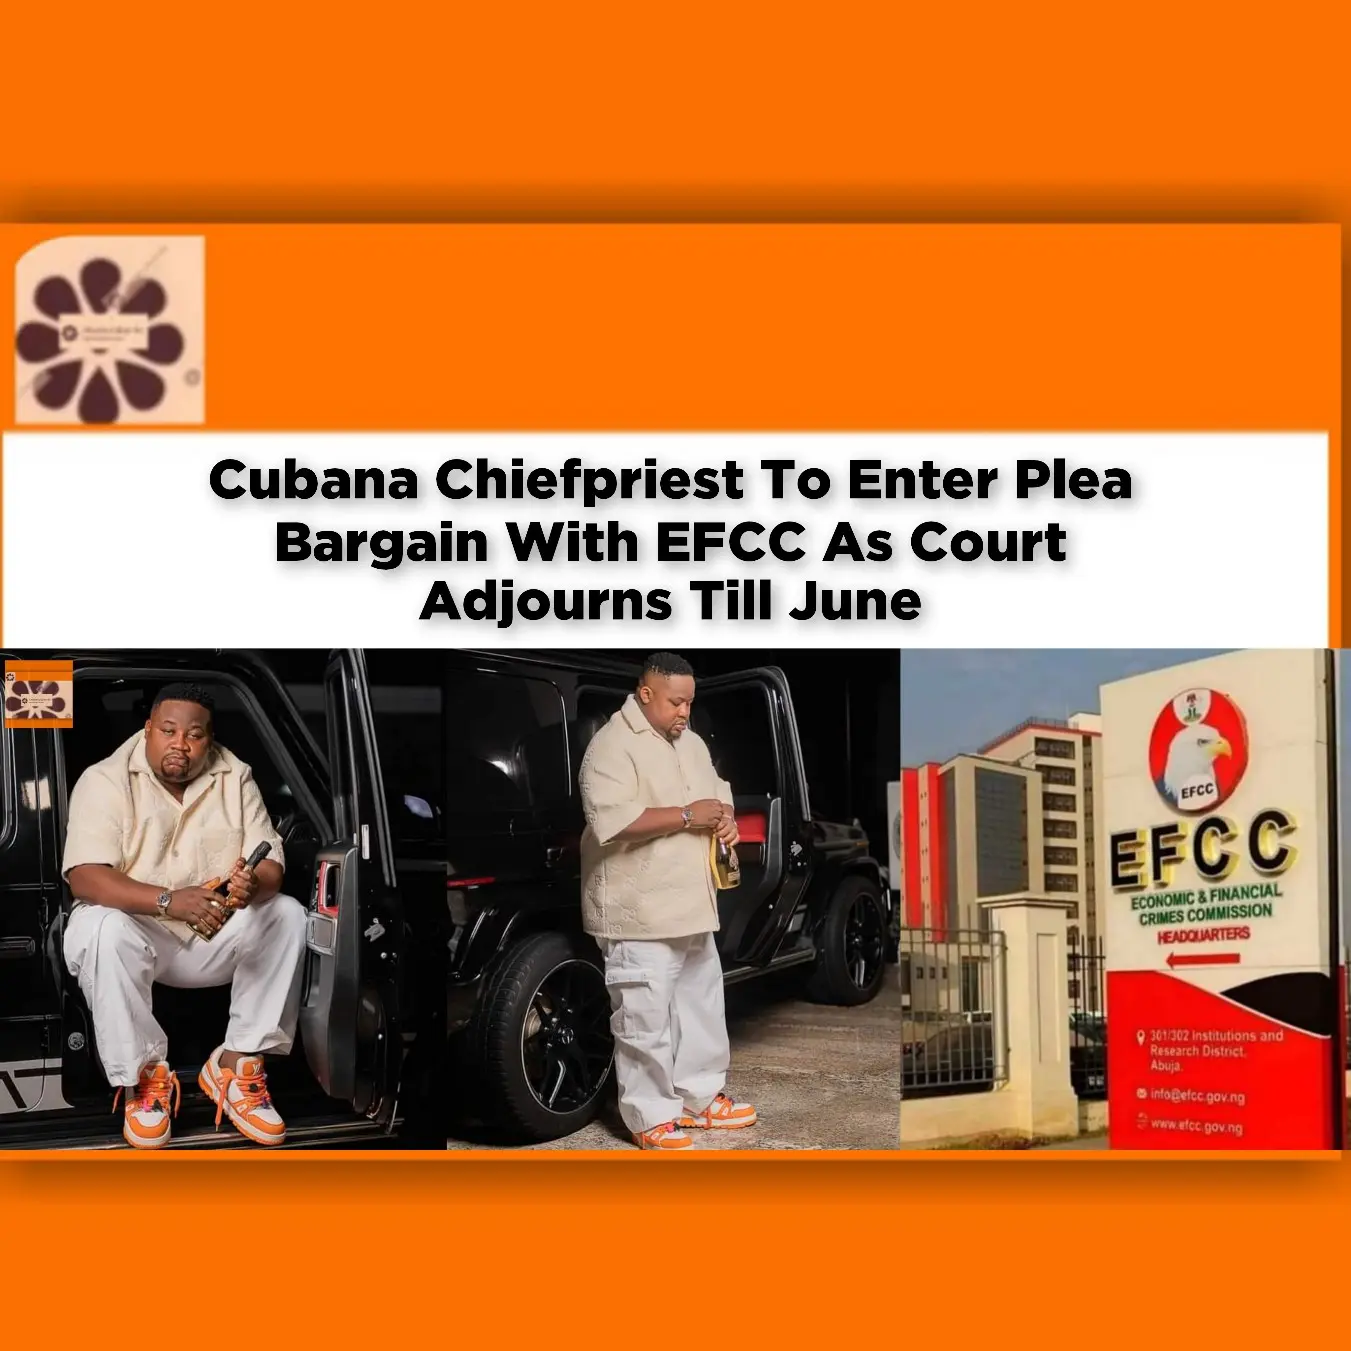 Cubana Chiefpriest To Enter Plea Bargain With EFCC As Court Adjourns Till June ~ OsazuwaAkonedo #America